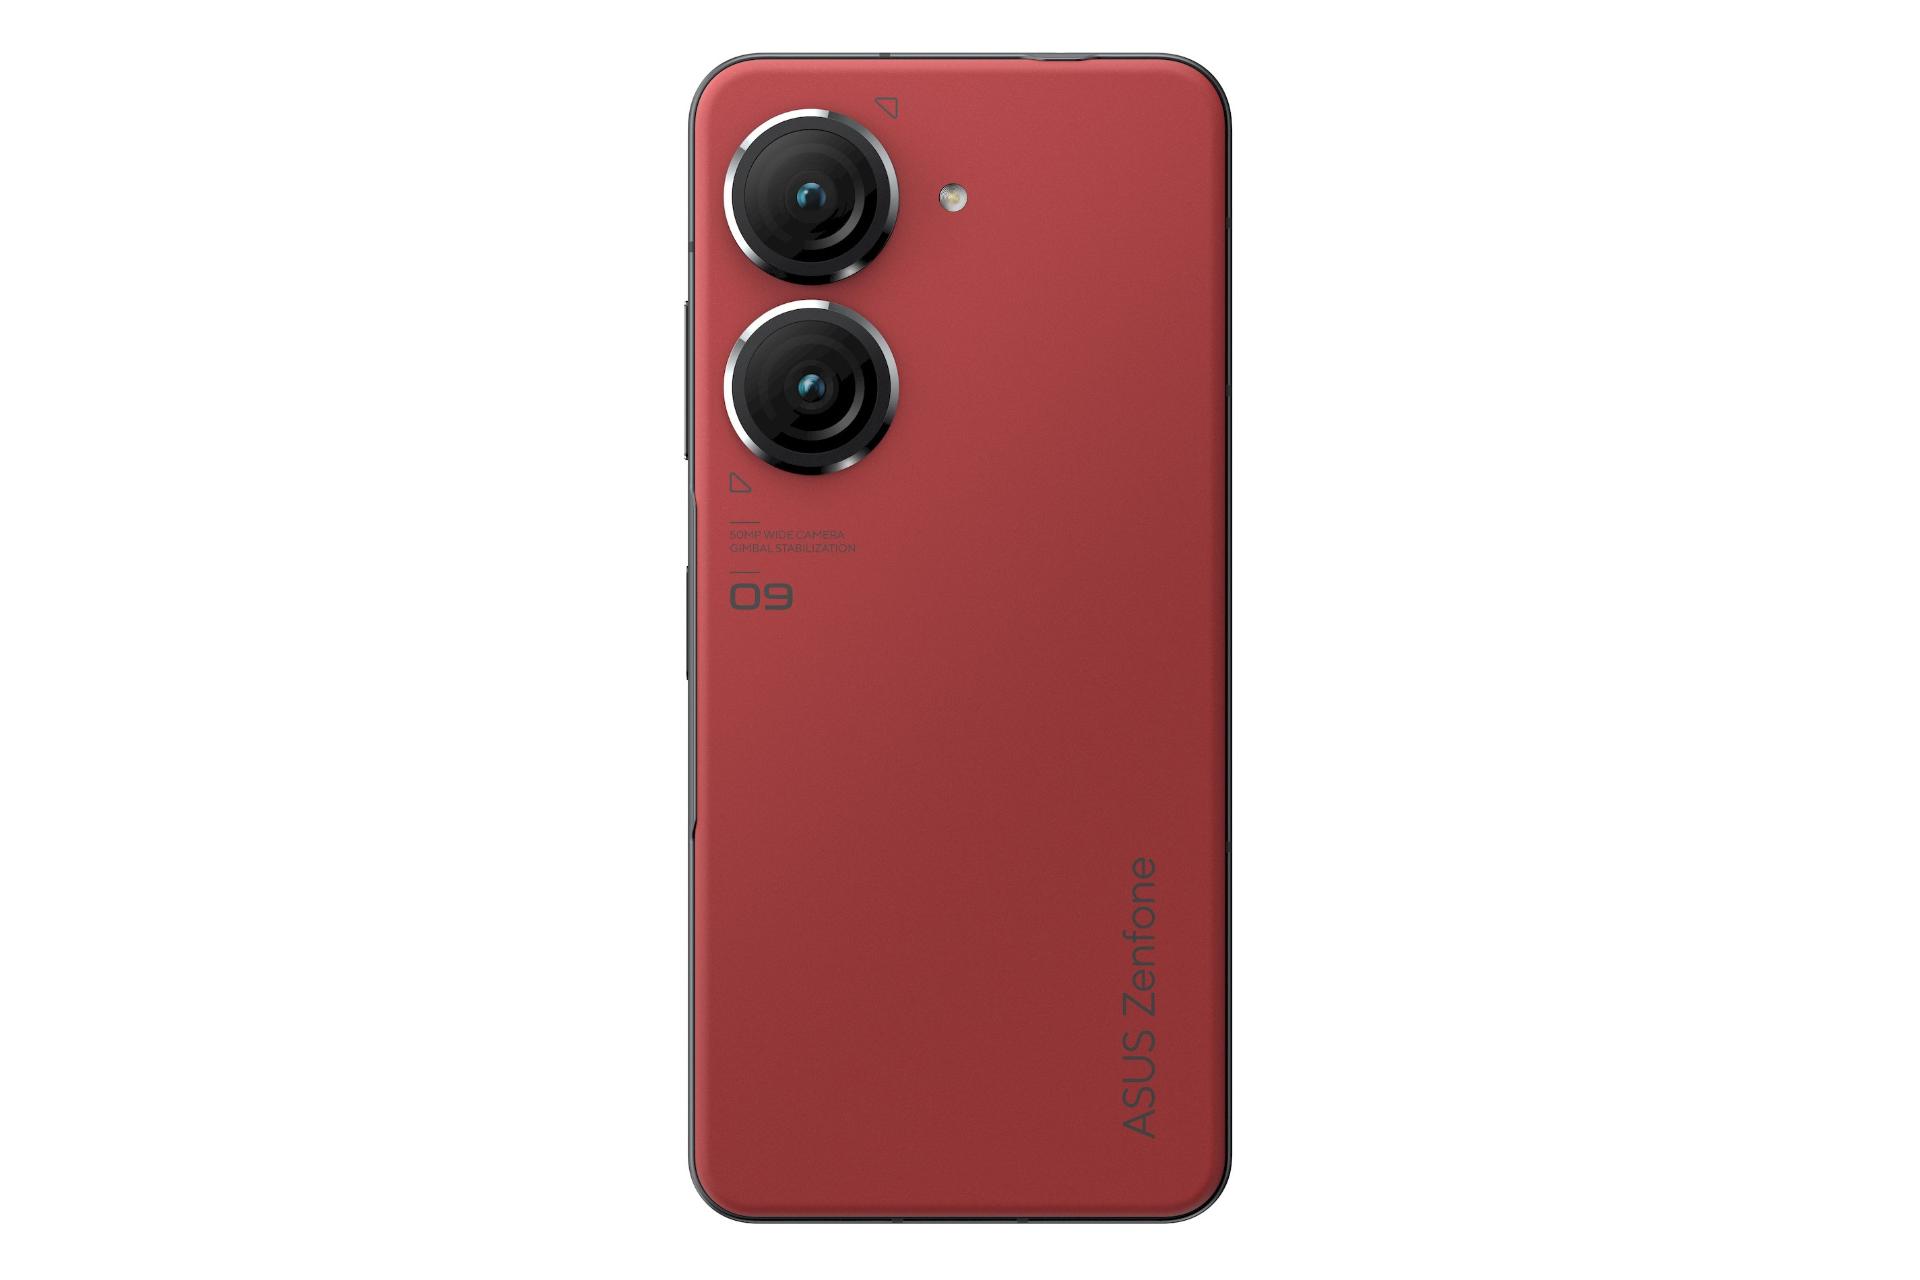 گوشی موبایل ذن فون 9 ایسوس / Asus Zenfone 9 قرمز